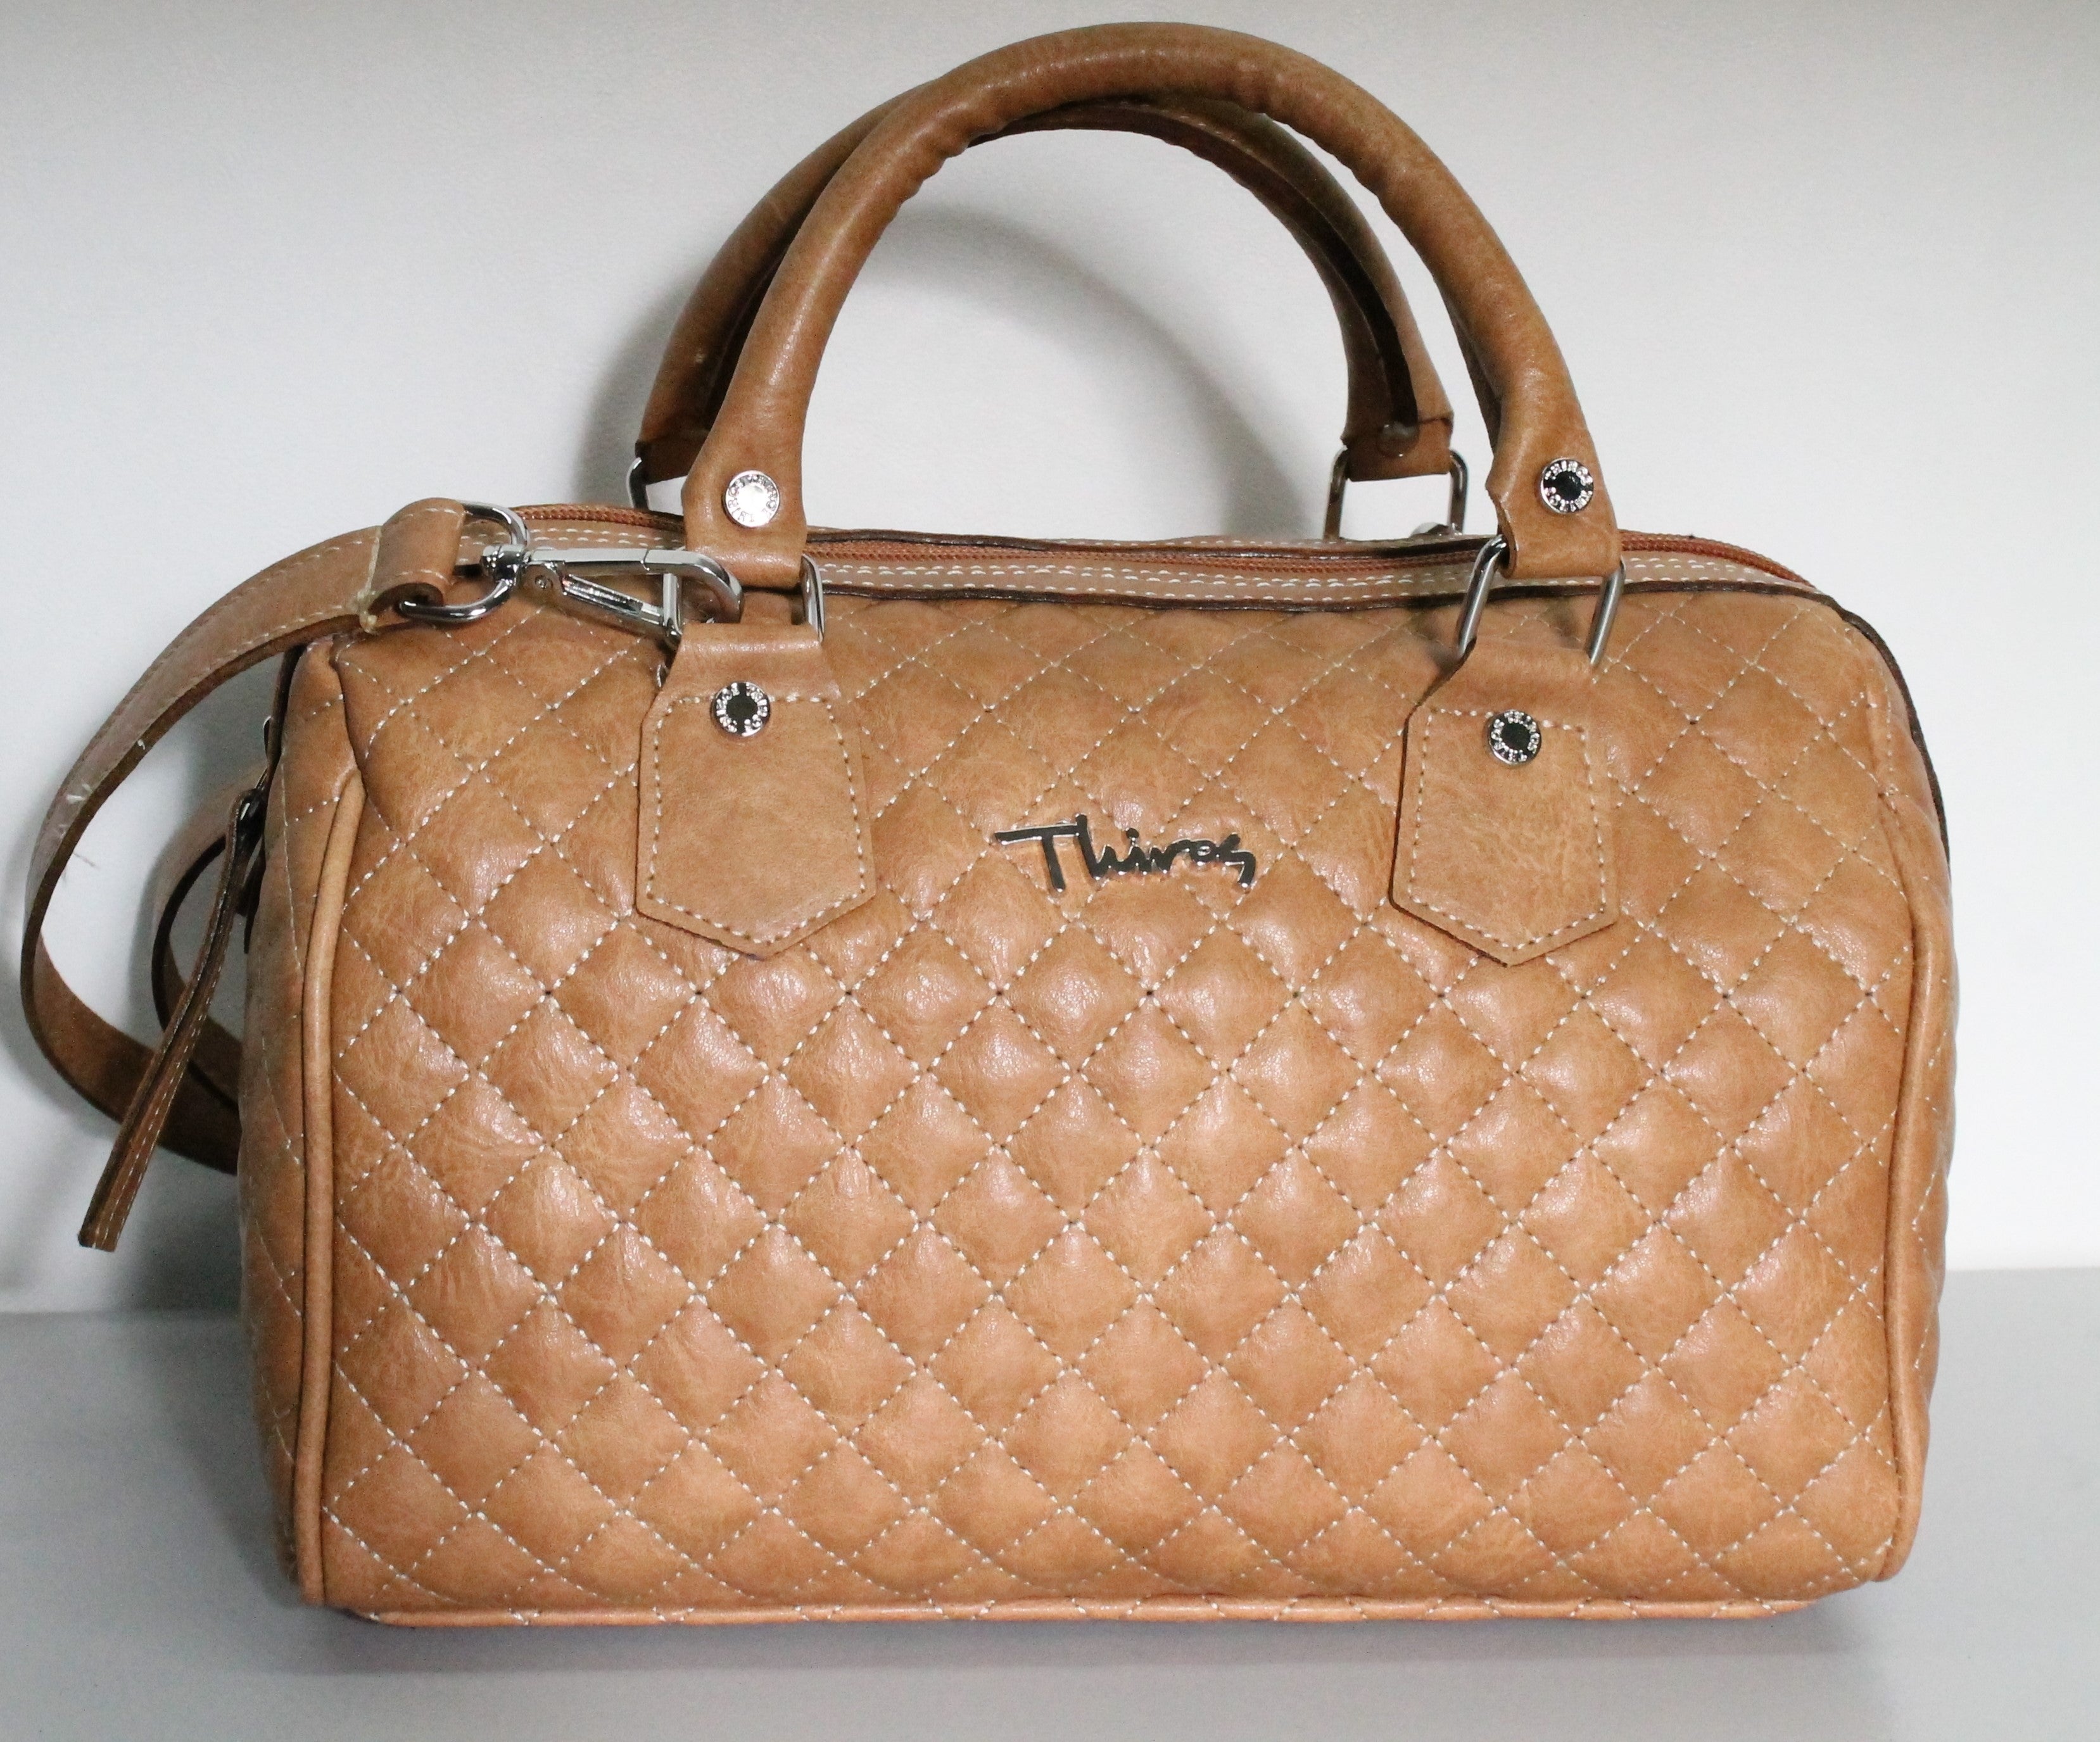 Glam quilted strap handbag